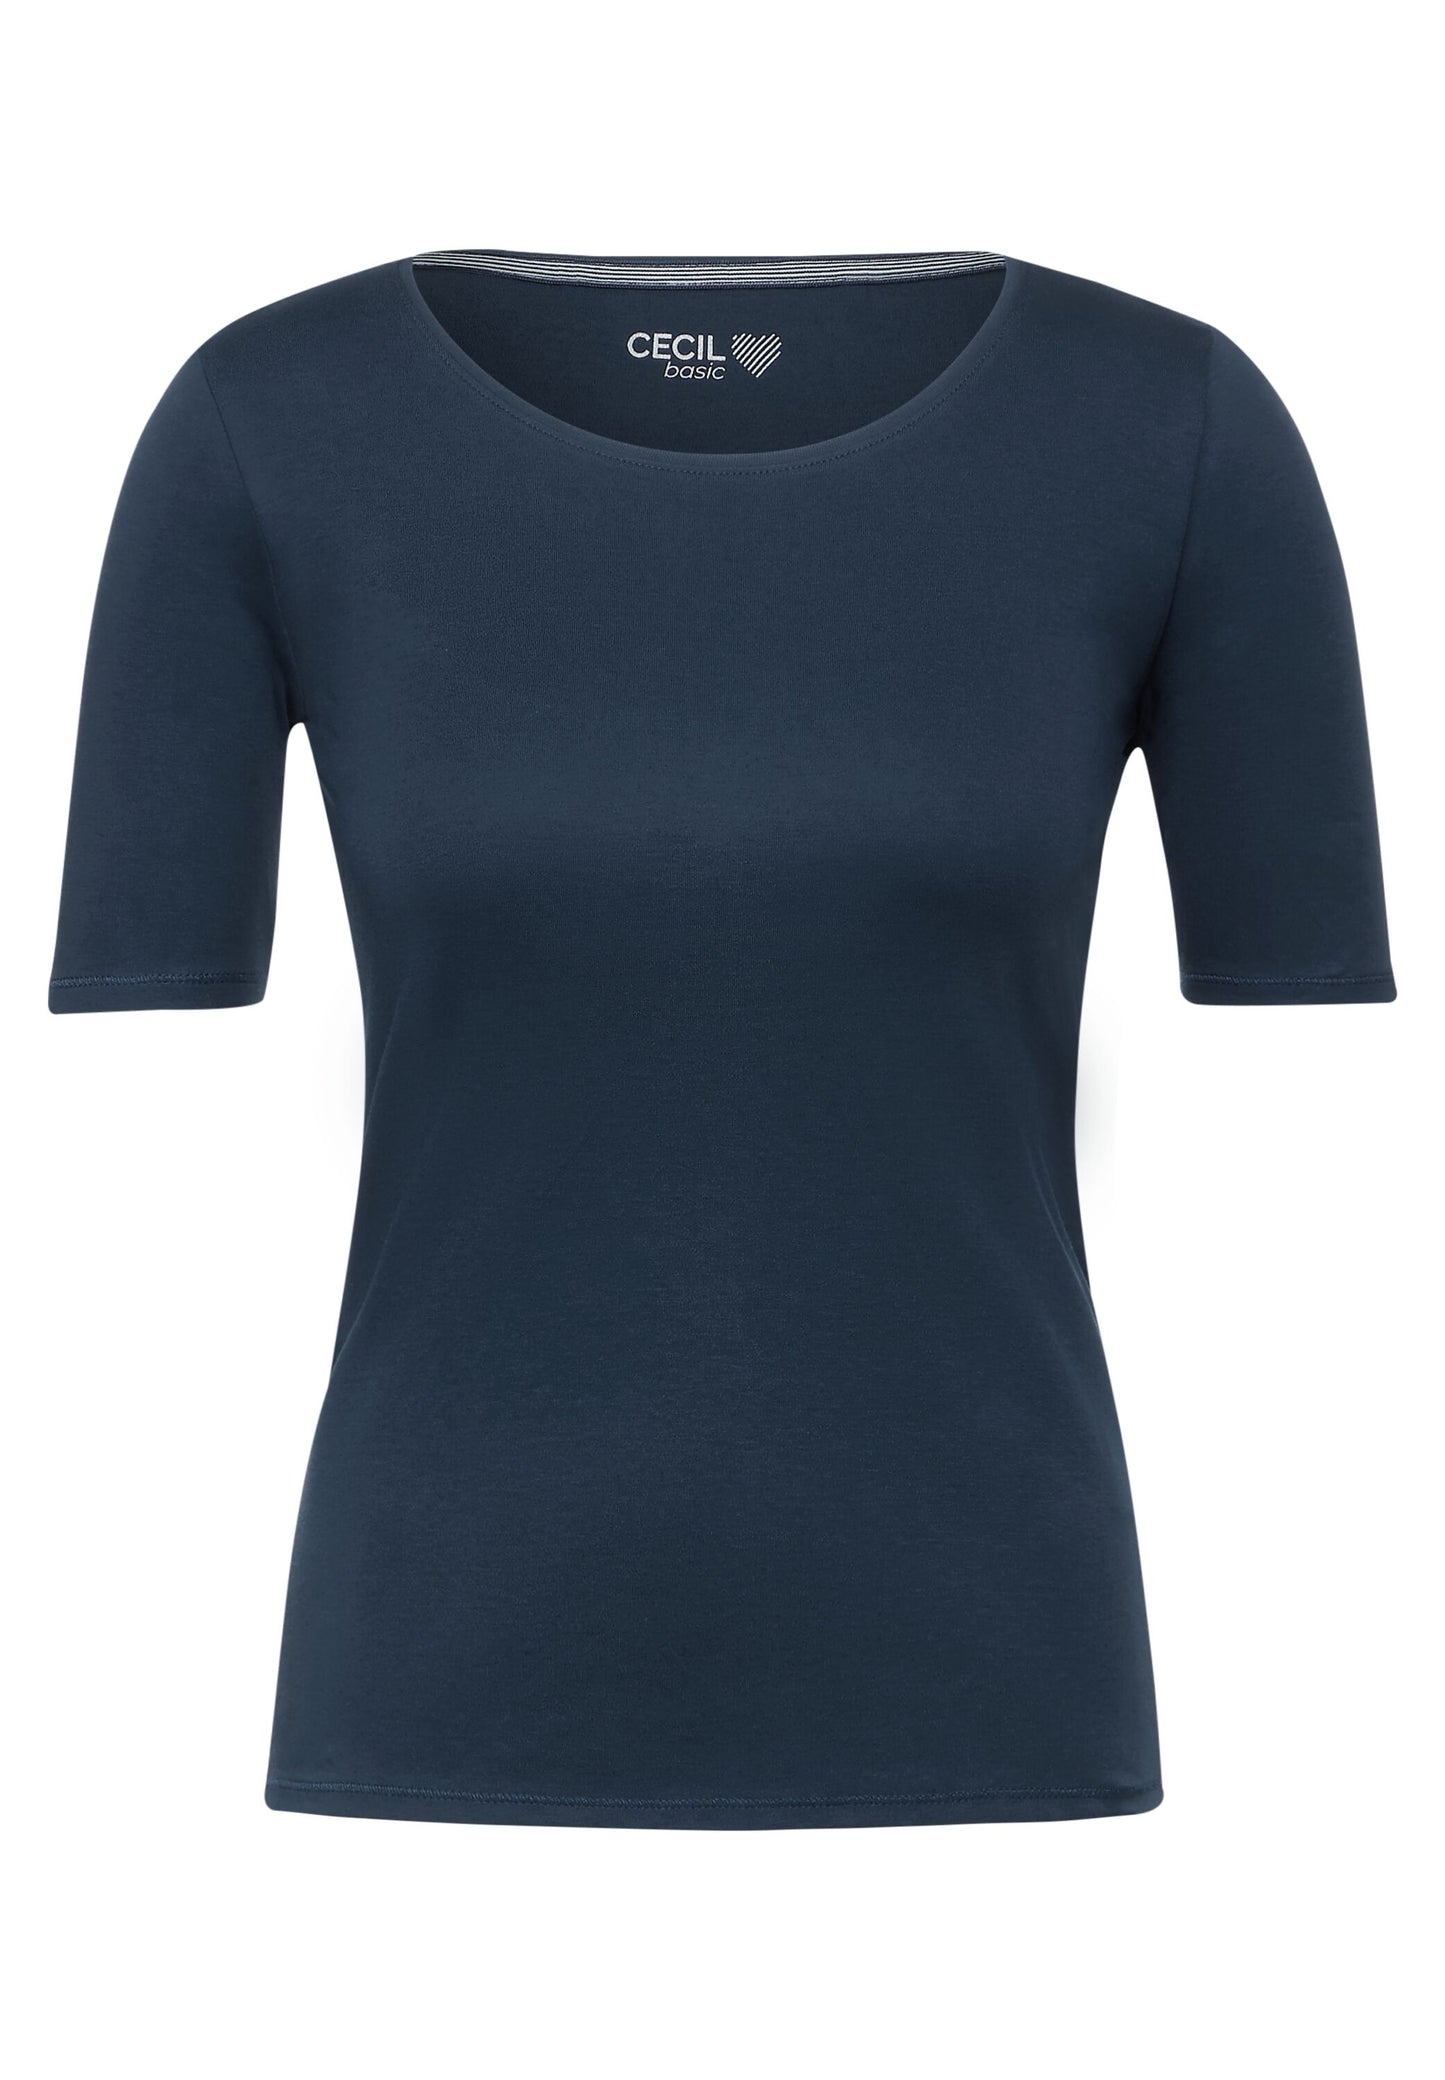 CECIL - Basic T-Shirt in Unifarbe - dark petrol blue